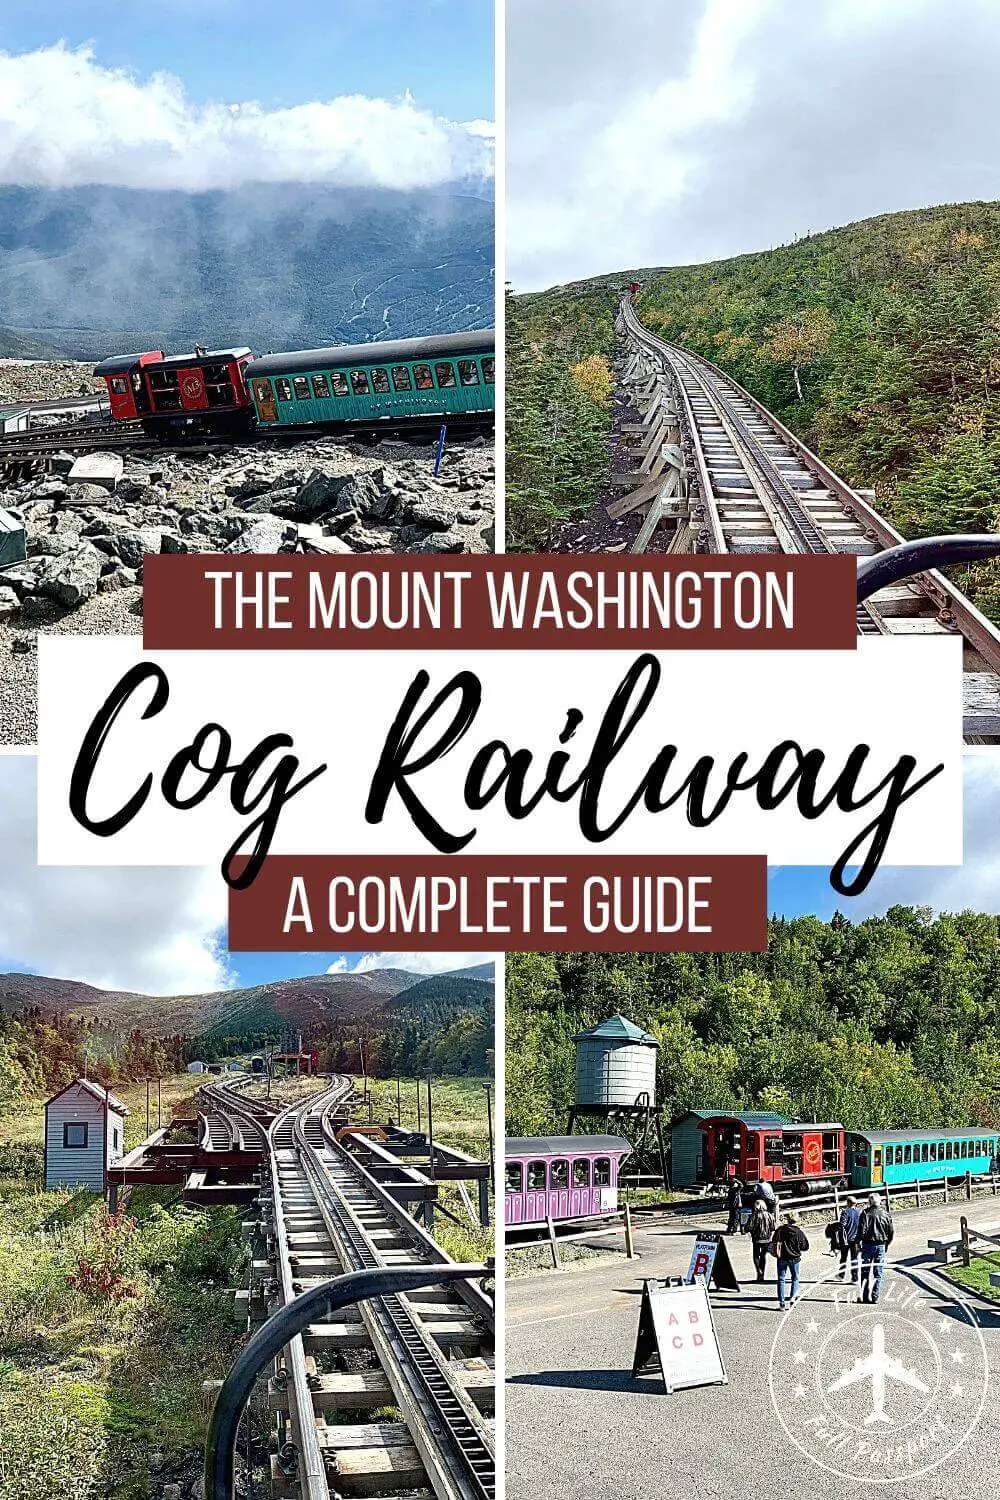 Summiting Mount Washington on the Historic Cog Railway